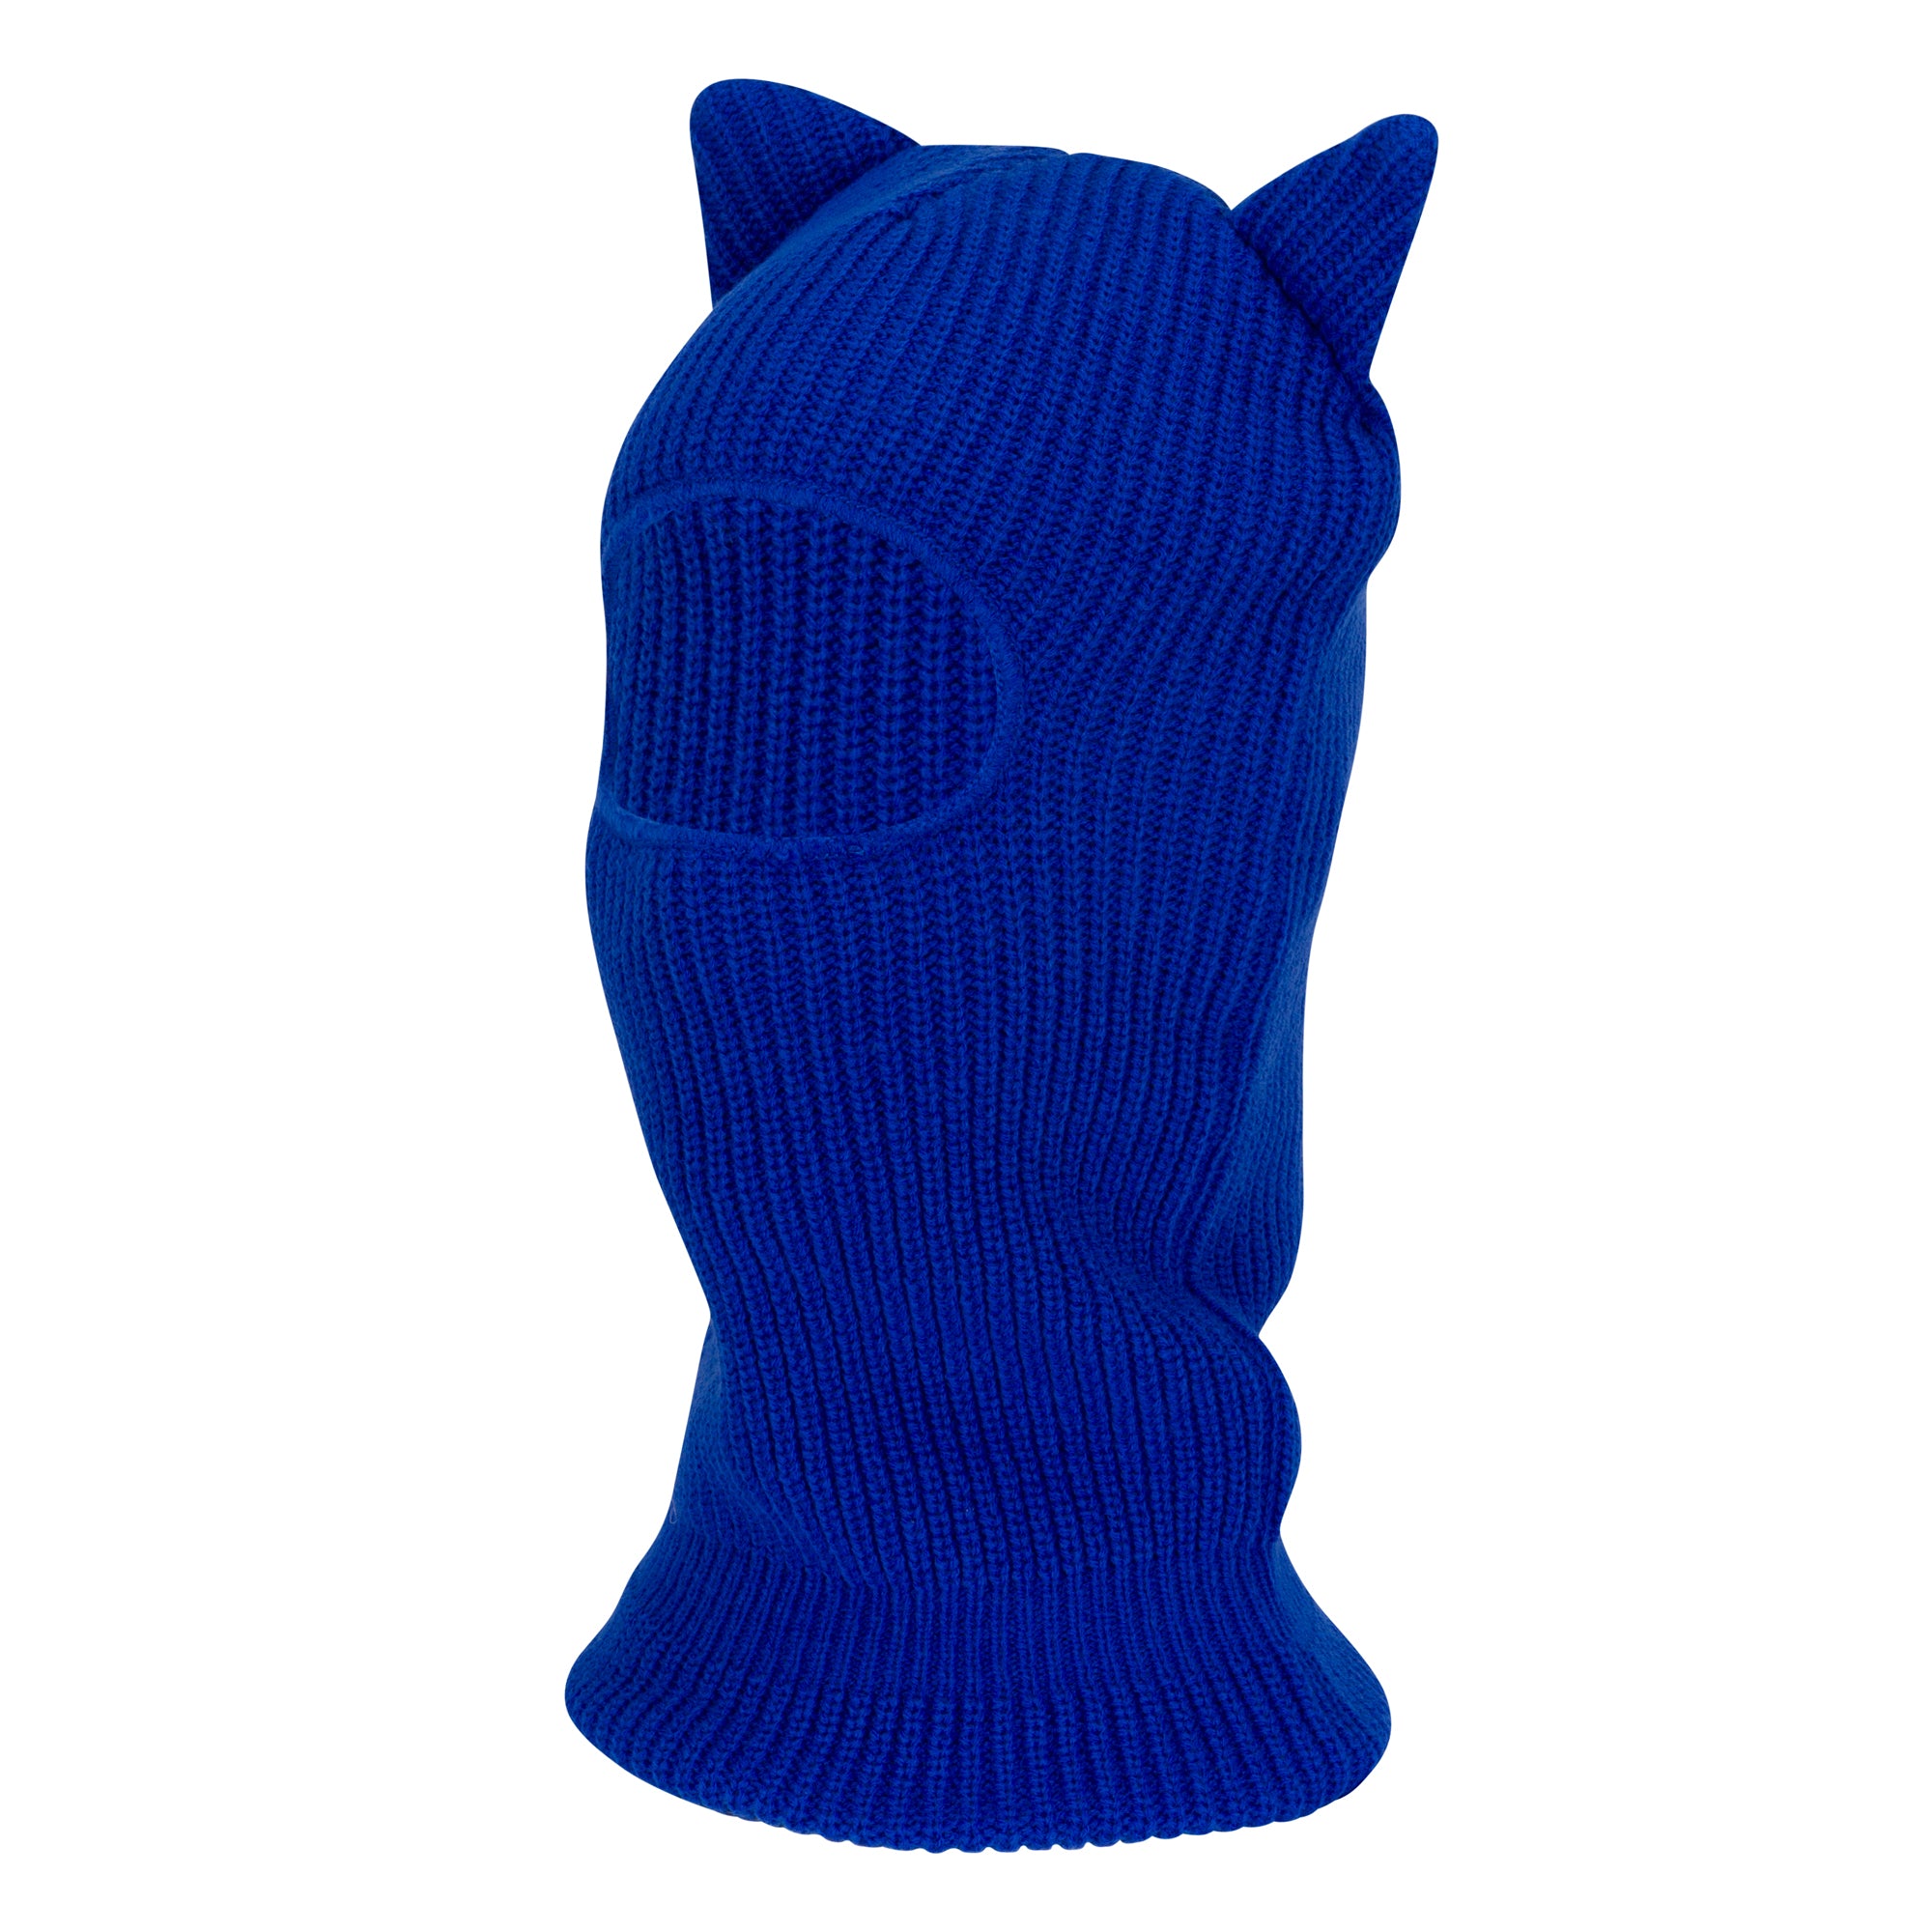 RIPNDIP Kitty Ears Ski Mask (Royal Blue)